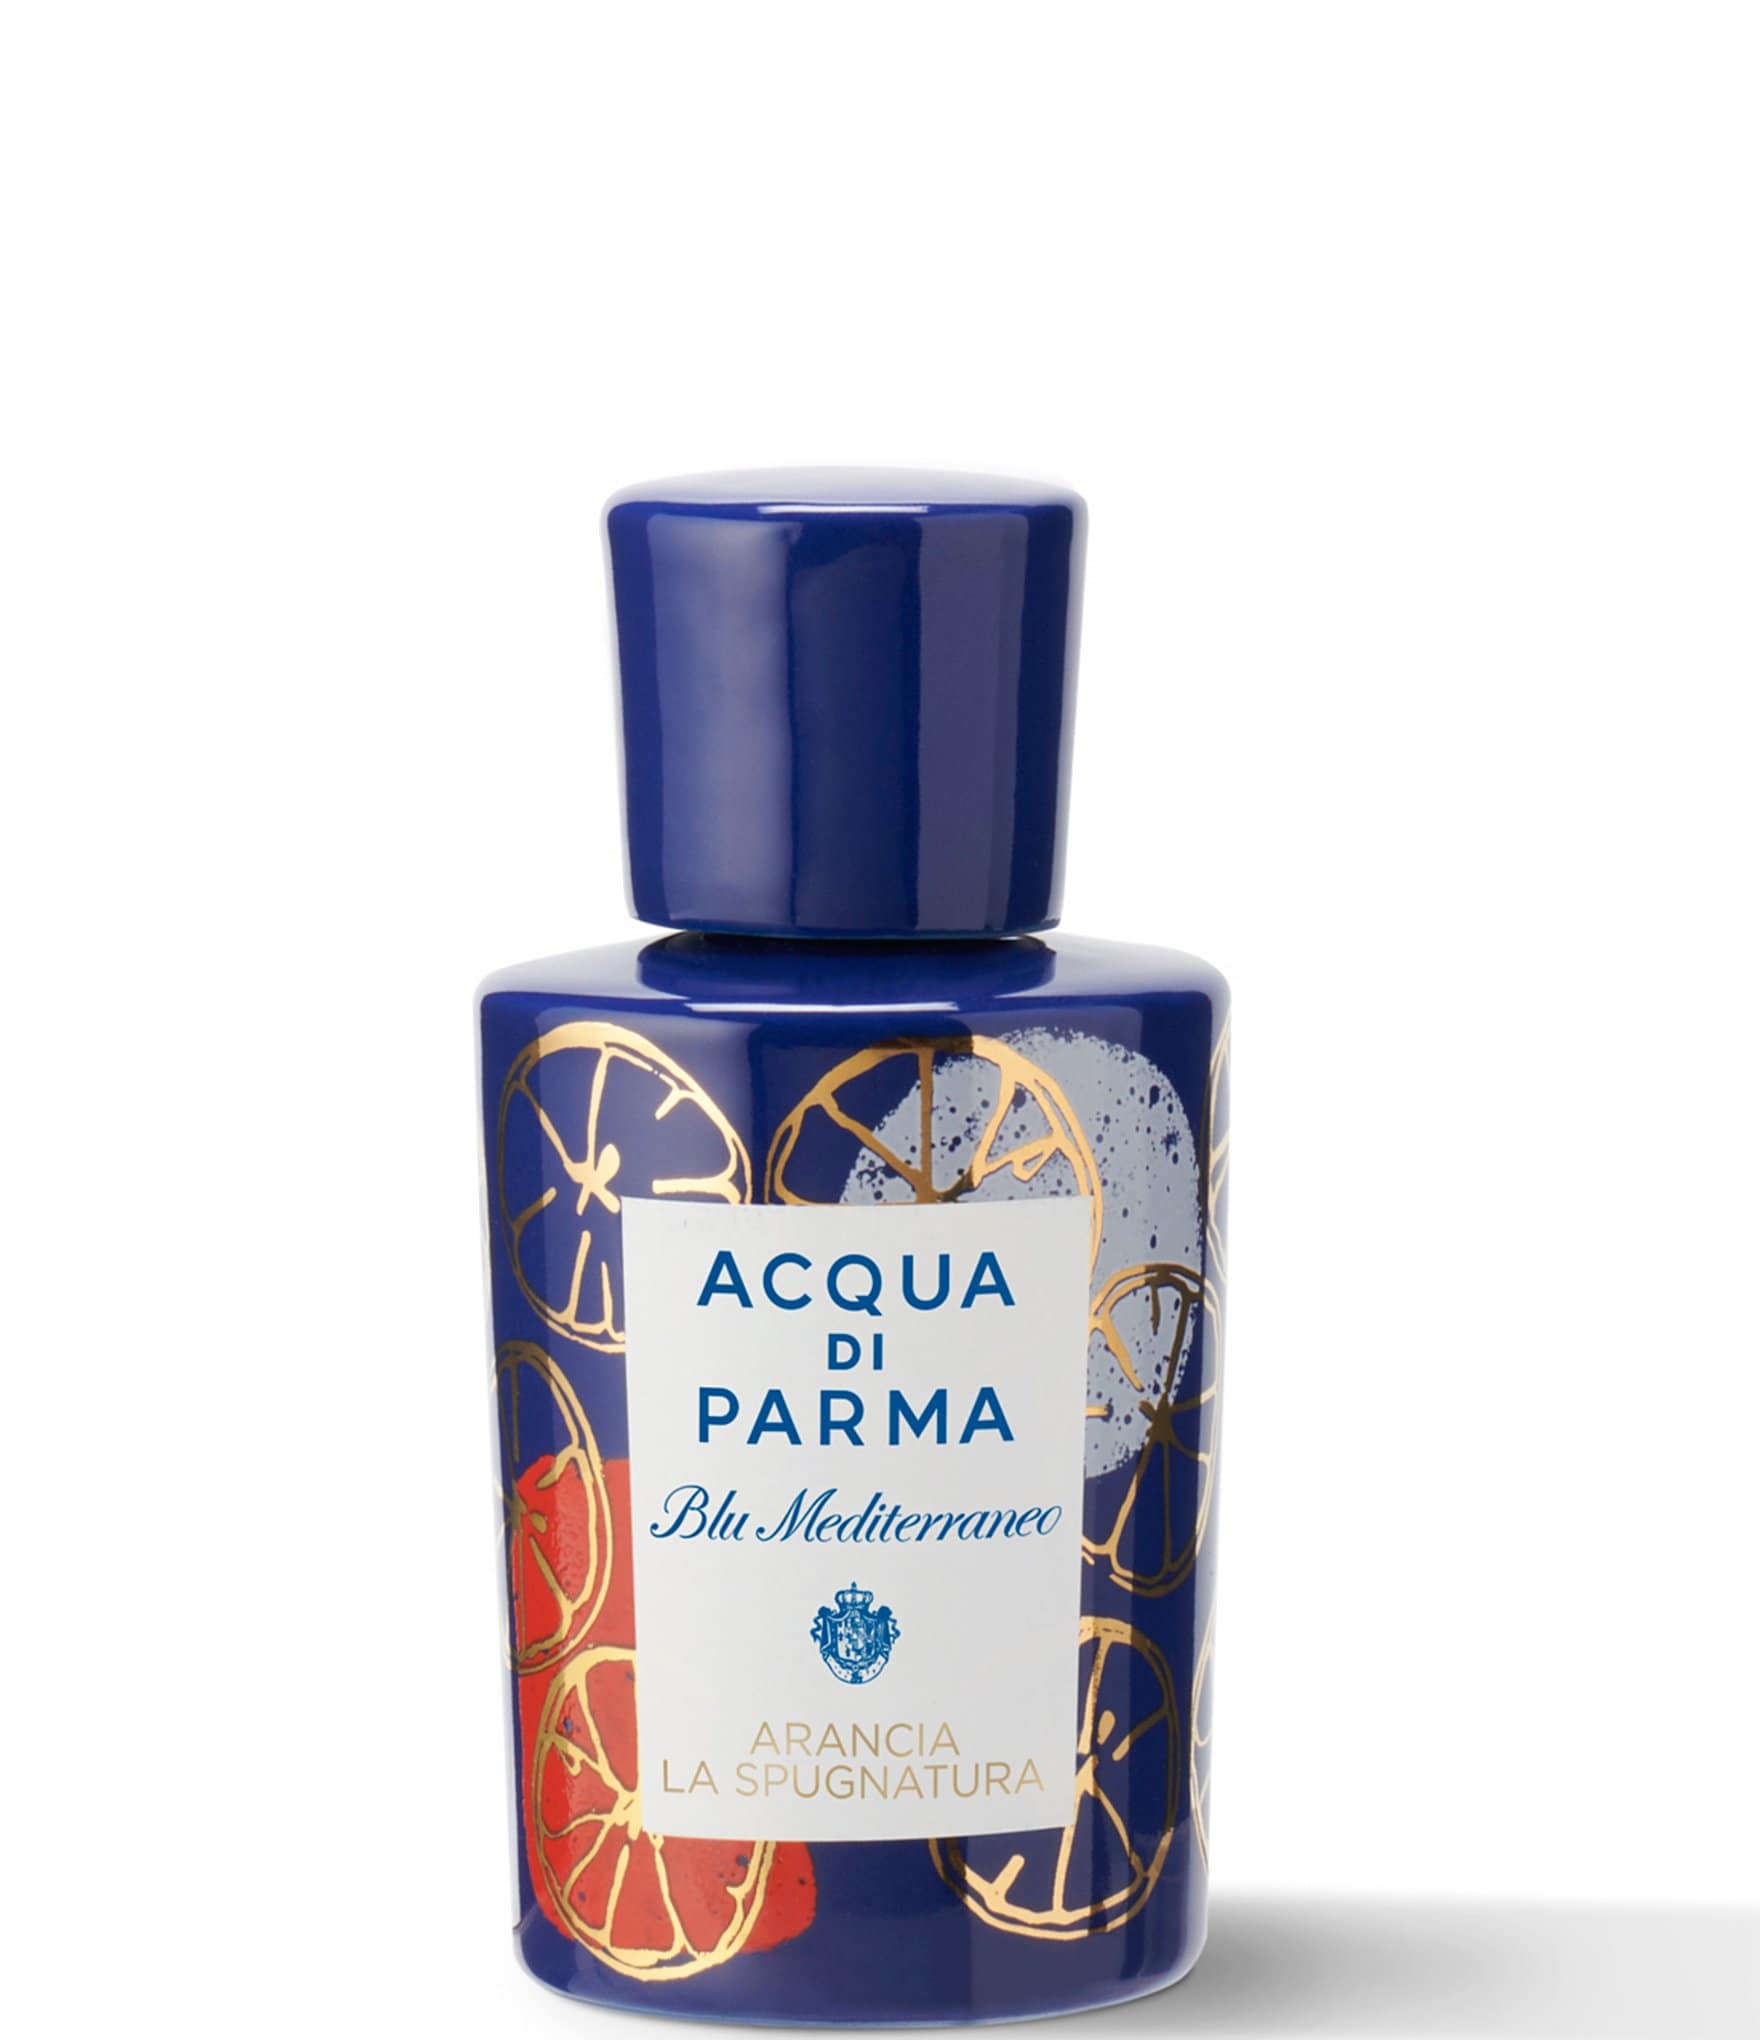 Acqua Di Parma Blu Mediterraneo Arancia La Spugnatura Eau De Toilette Spray  100ml, Luxury Perfumes & Cosmetics